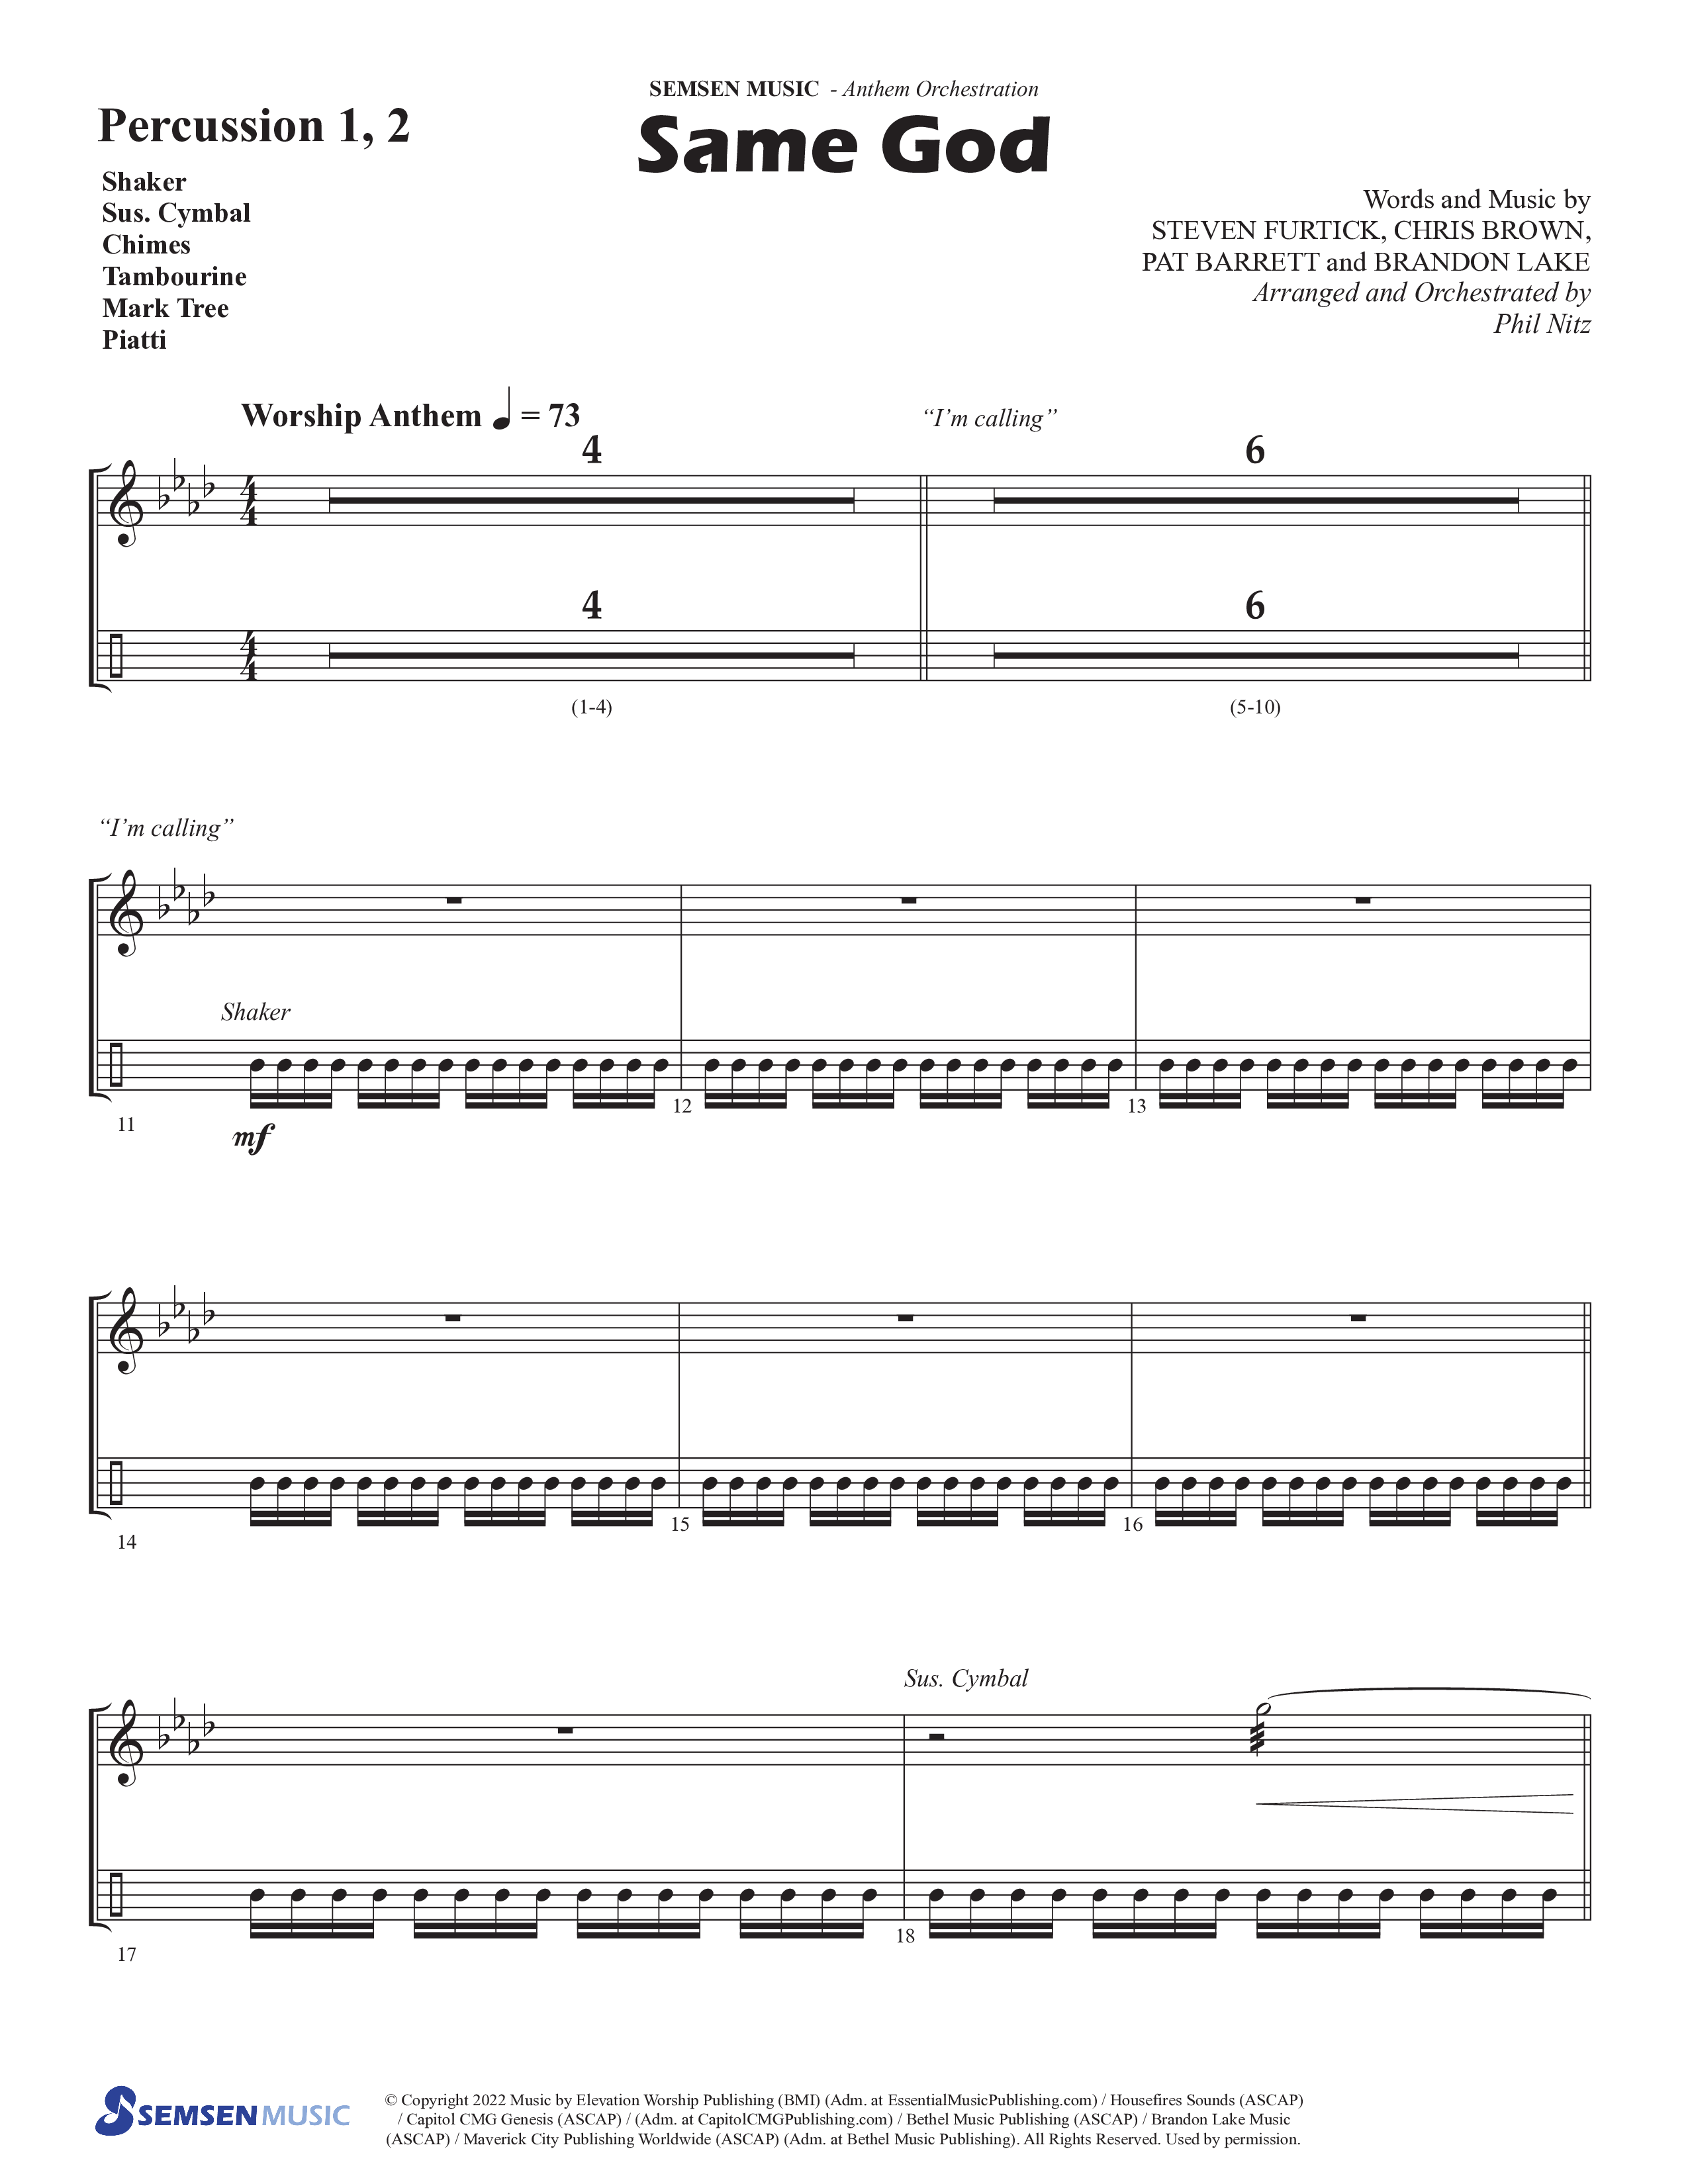 Same God (Choral Anthem SATB) Percussion 1/2 (Semsen Music / Arr. Phil Nitz)